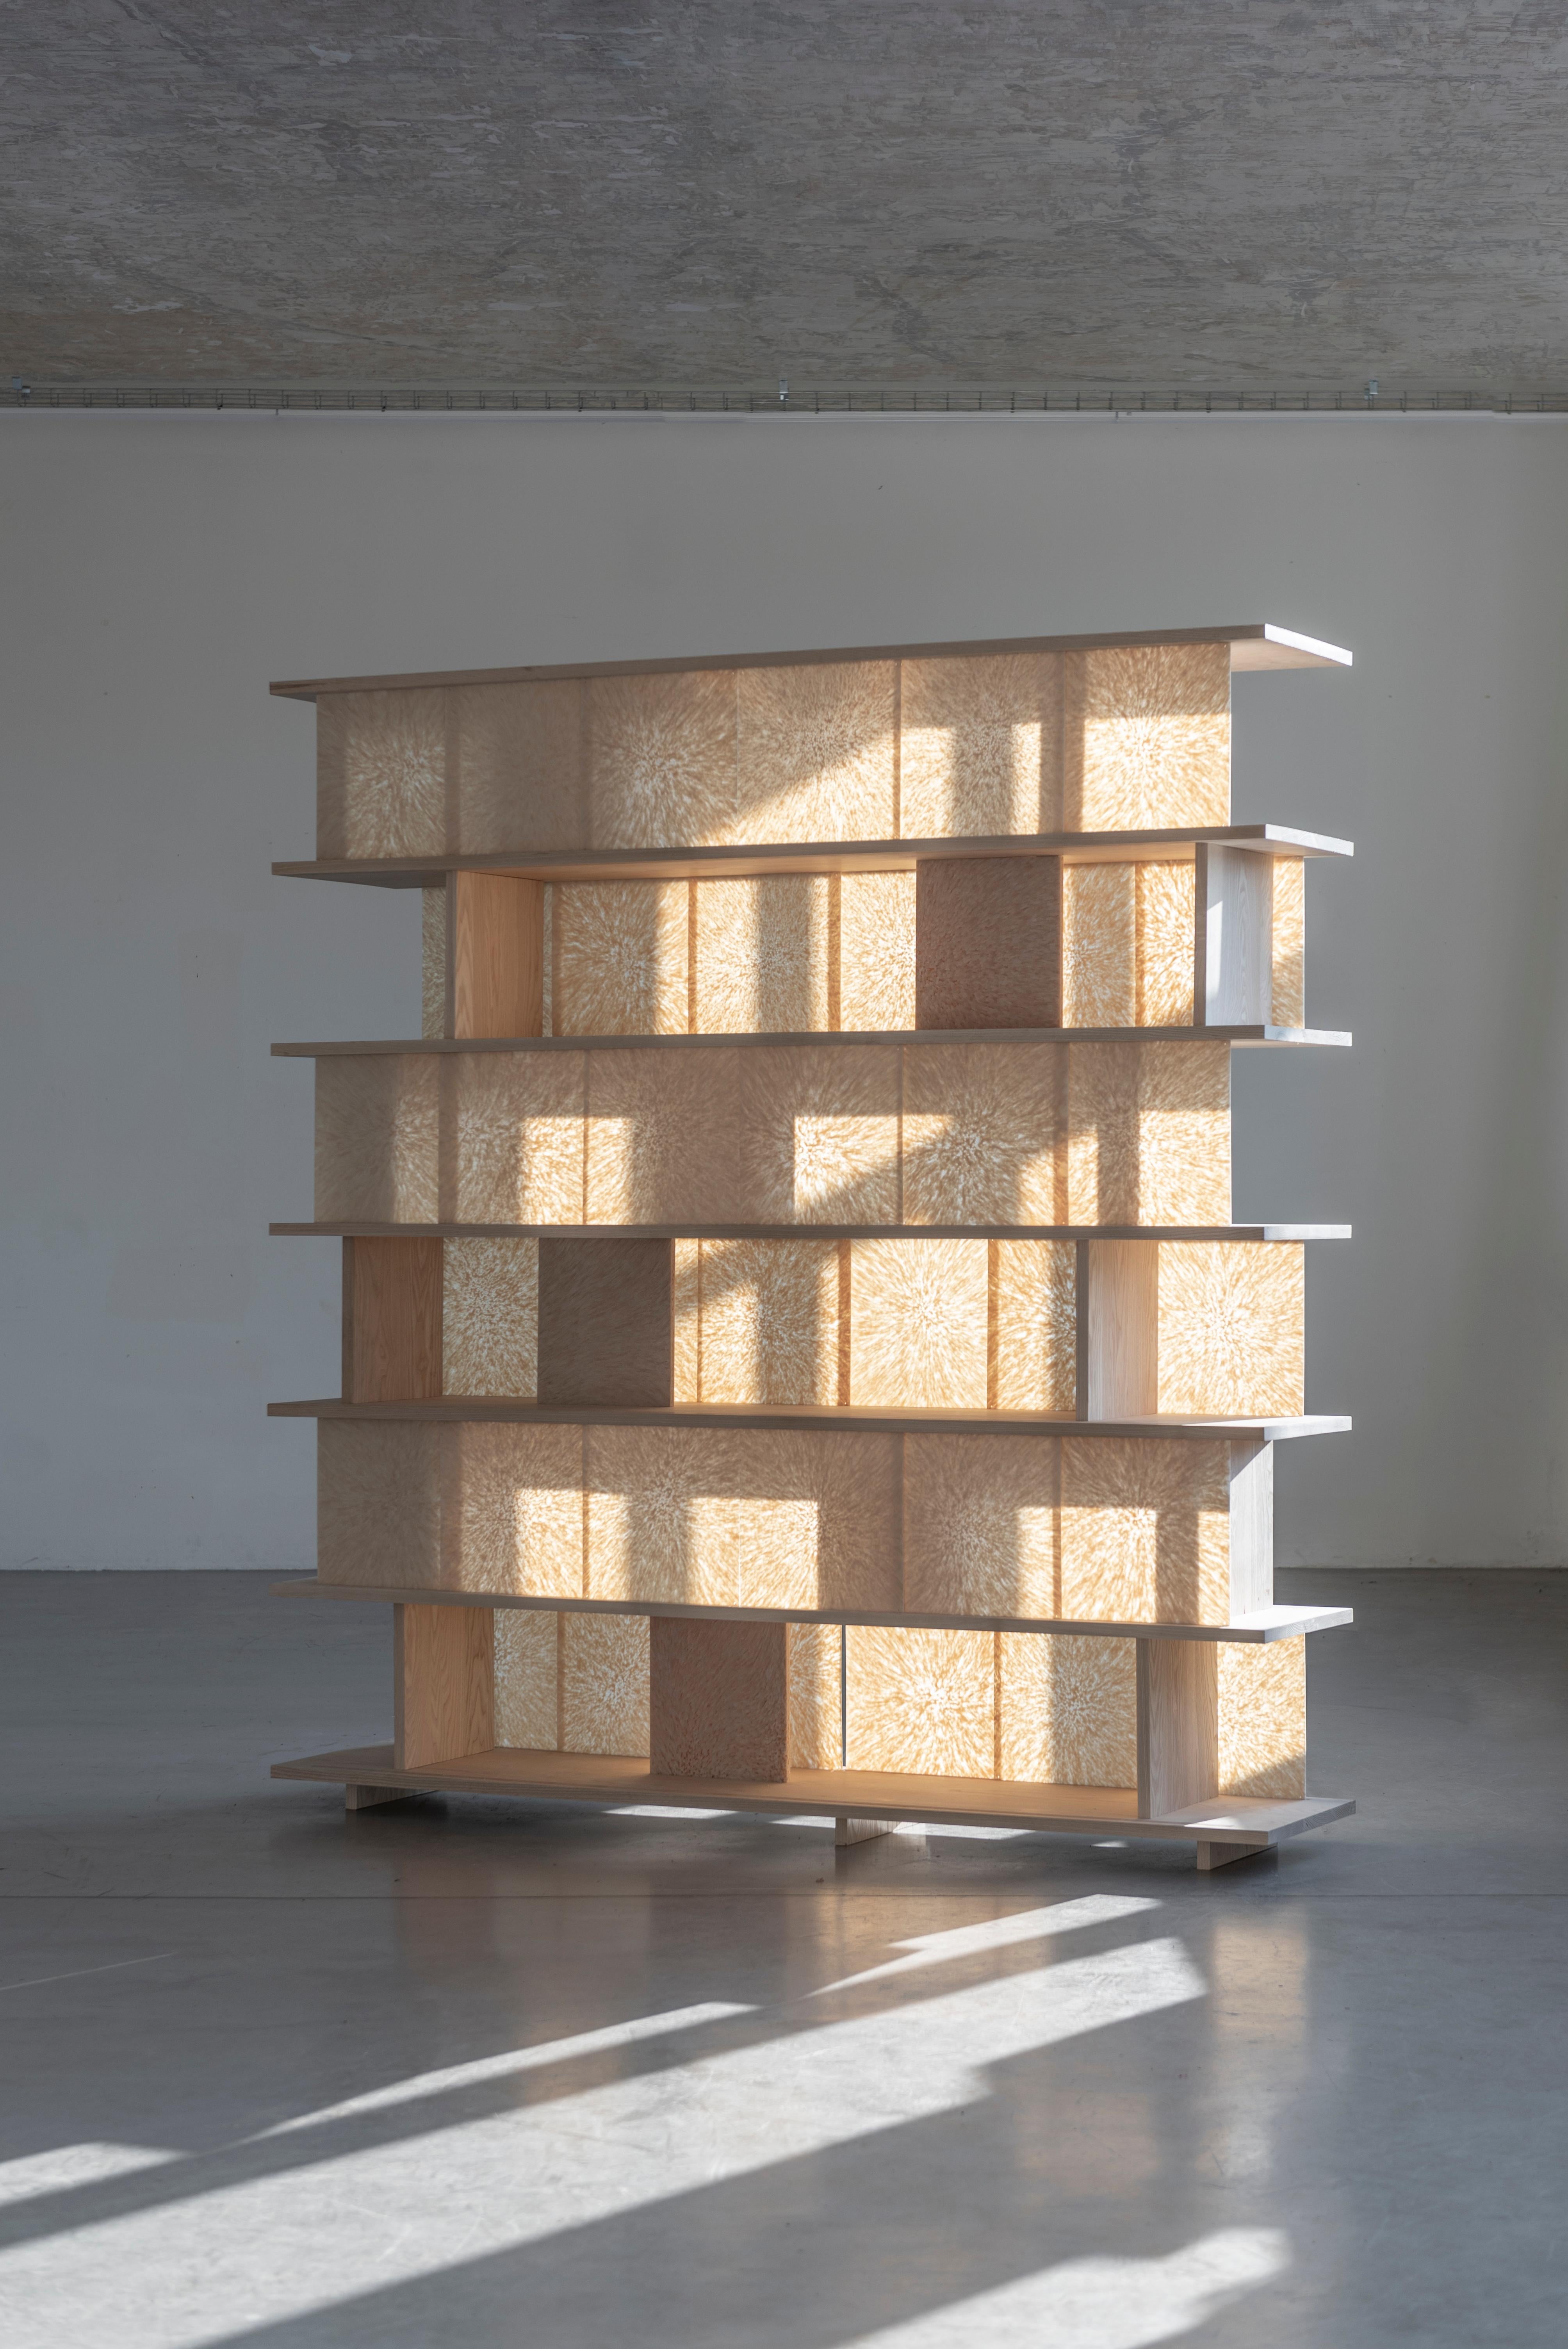 Bookshelf by Vlasta Kubusova
Materials: Wood, Nuatan bioplastic sheets
Dimensions: W 201 x H 201.5 x D 45 cm

Crafting plastics! studio was founded in 2016 by product designer Vlasta Kubušová and production designer Miroslav Král. The studio is